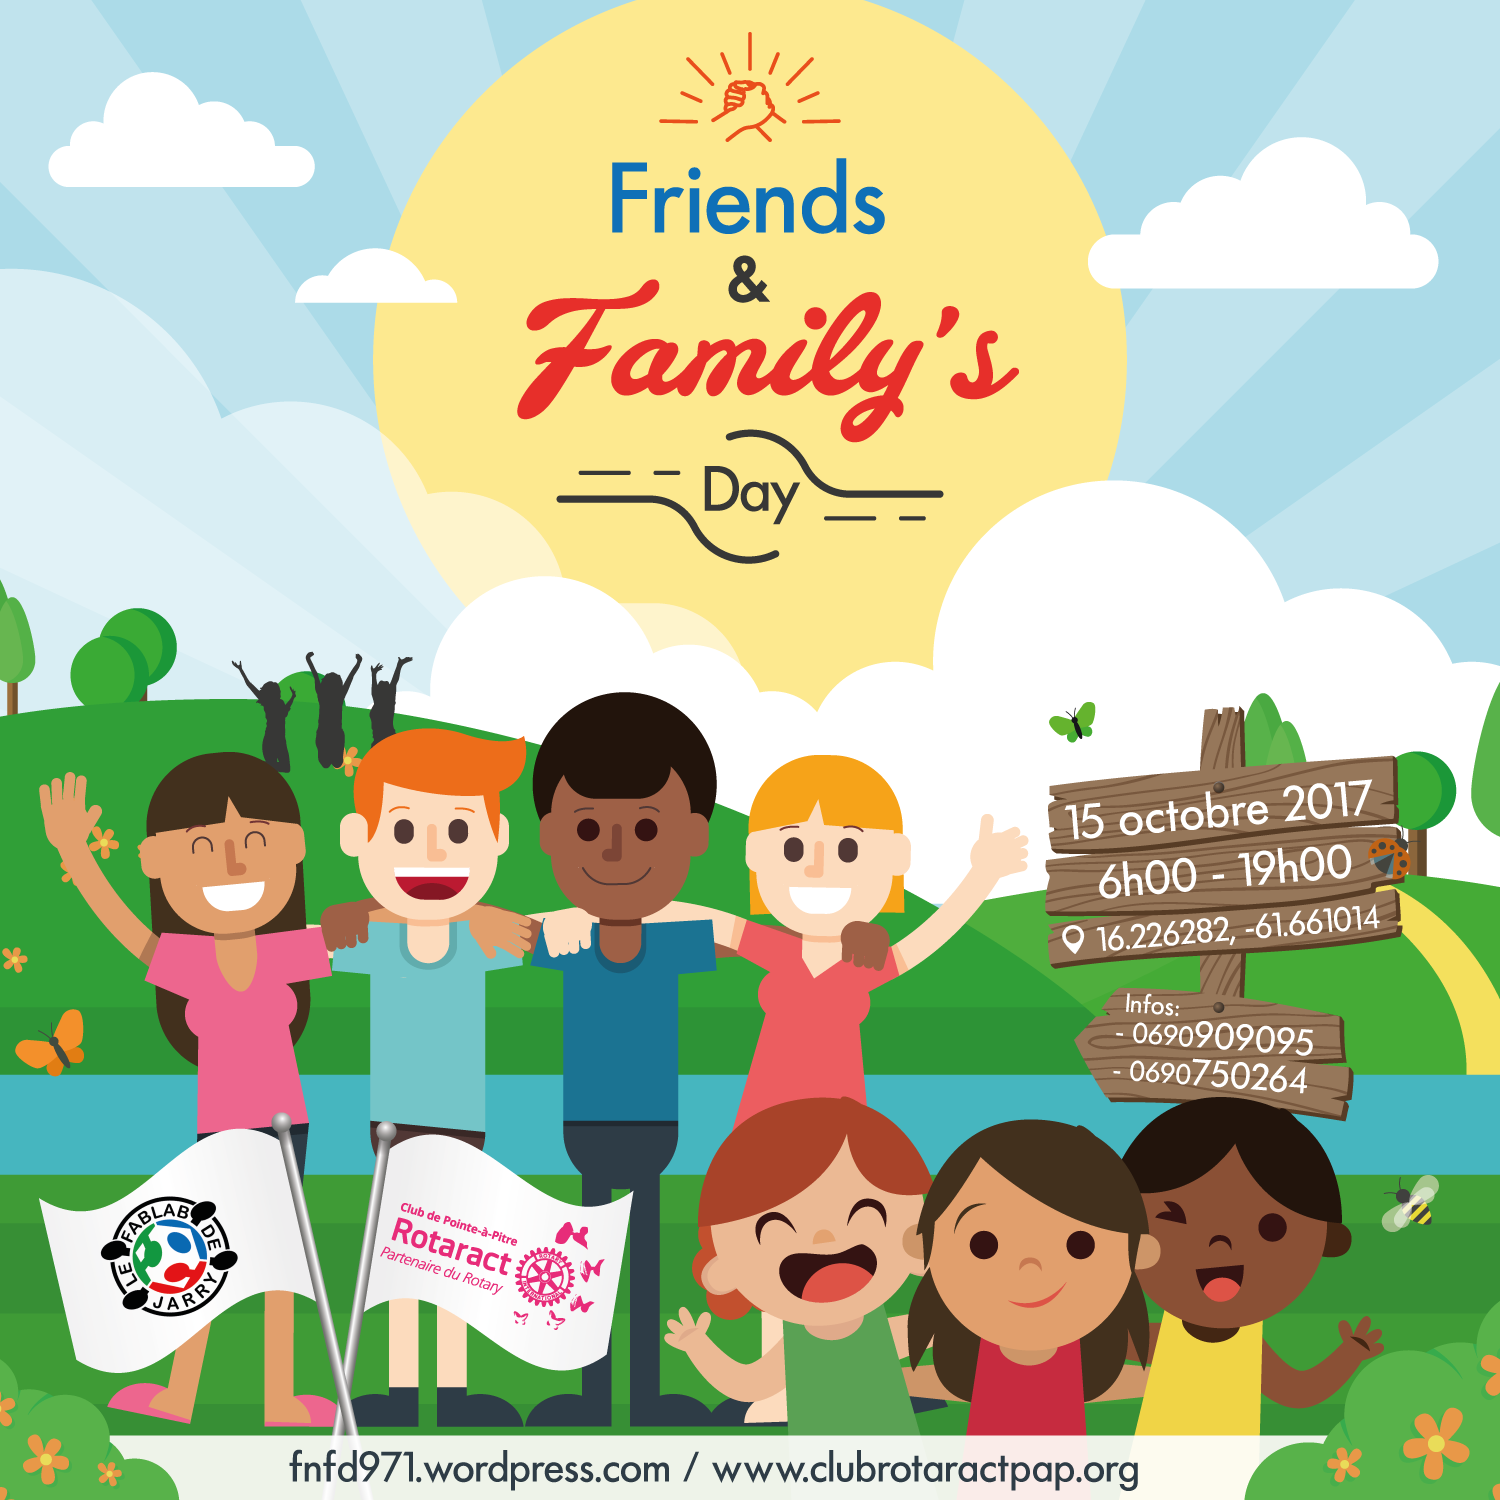 Friends & Family's Day 971 - 15 octobre 2017